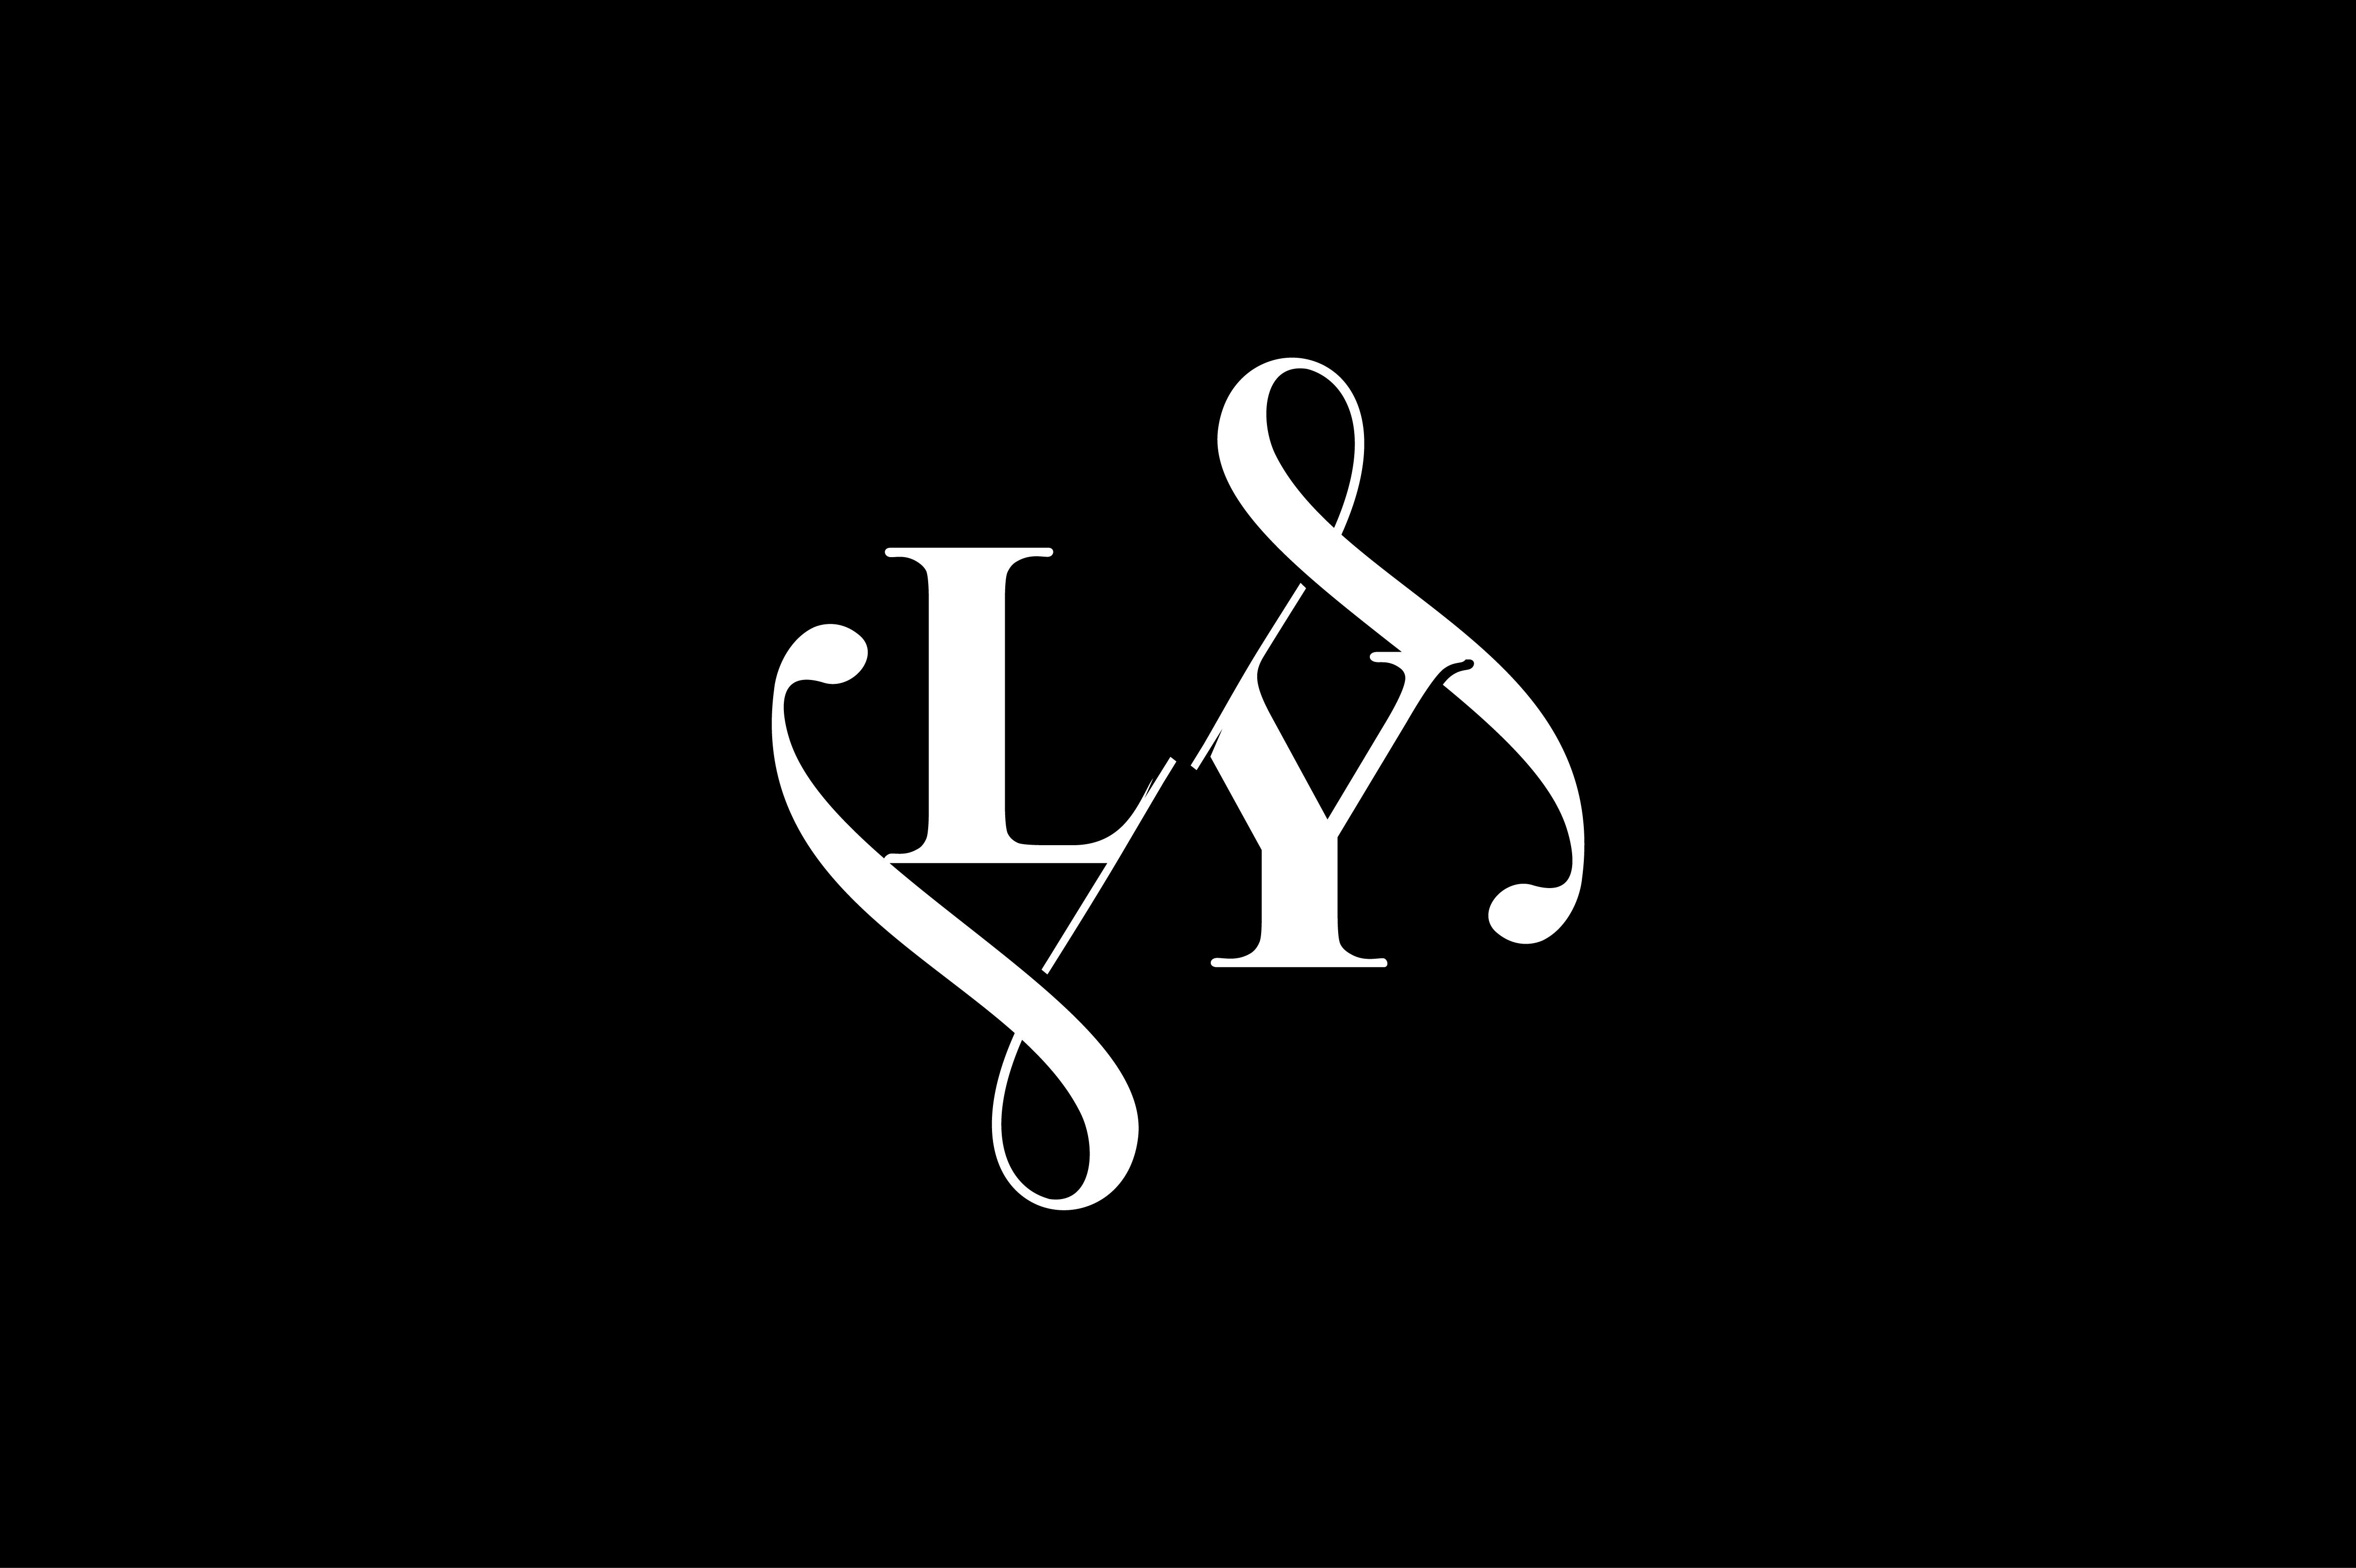 Monogram LY Logo Design By Vectorseller